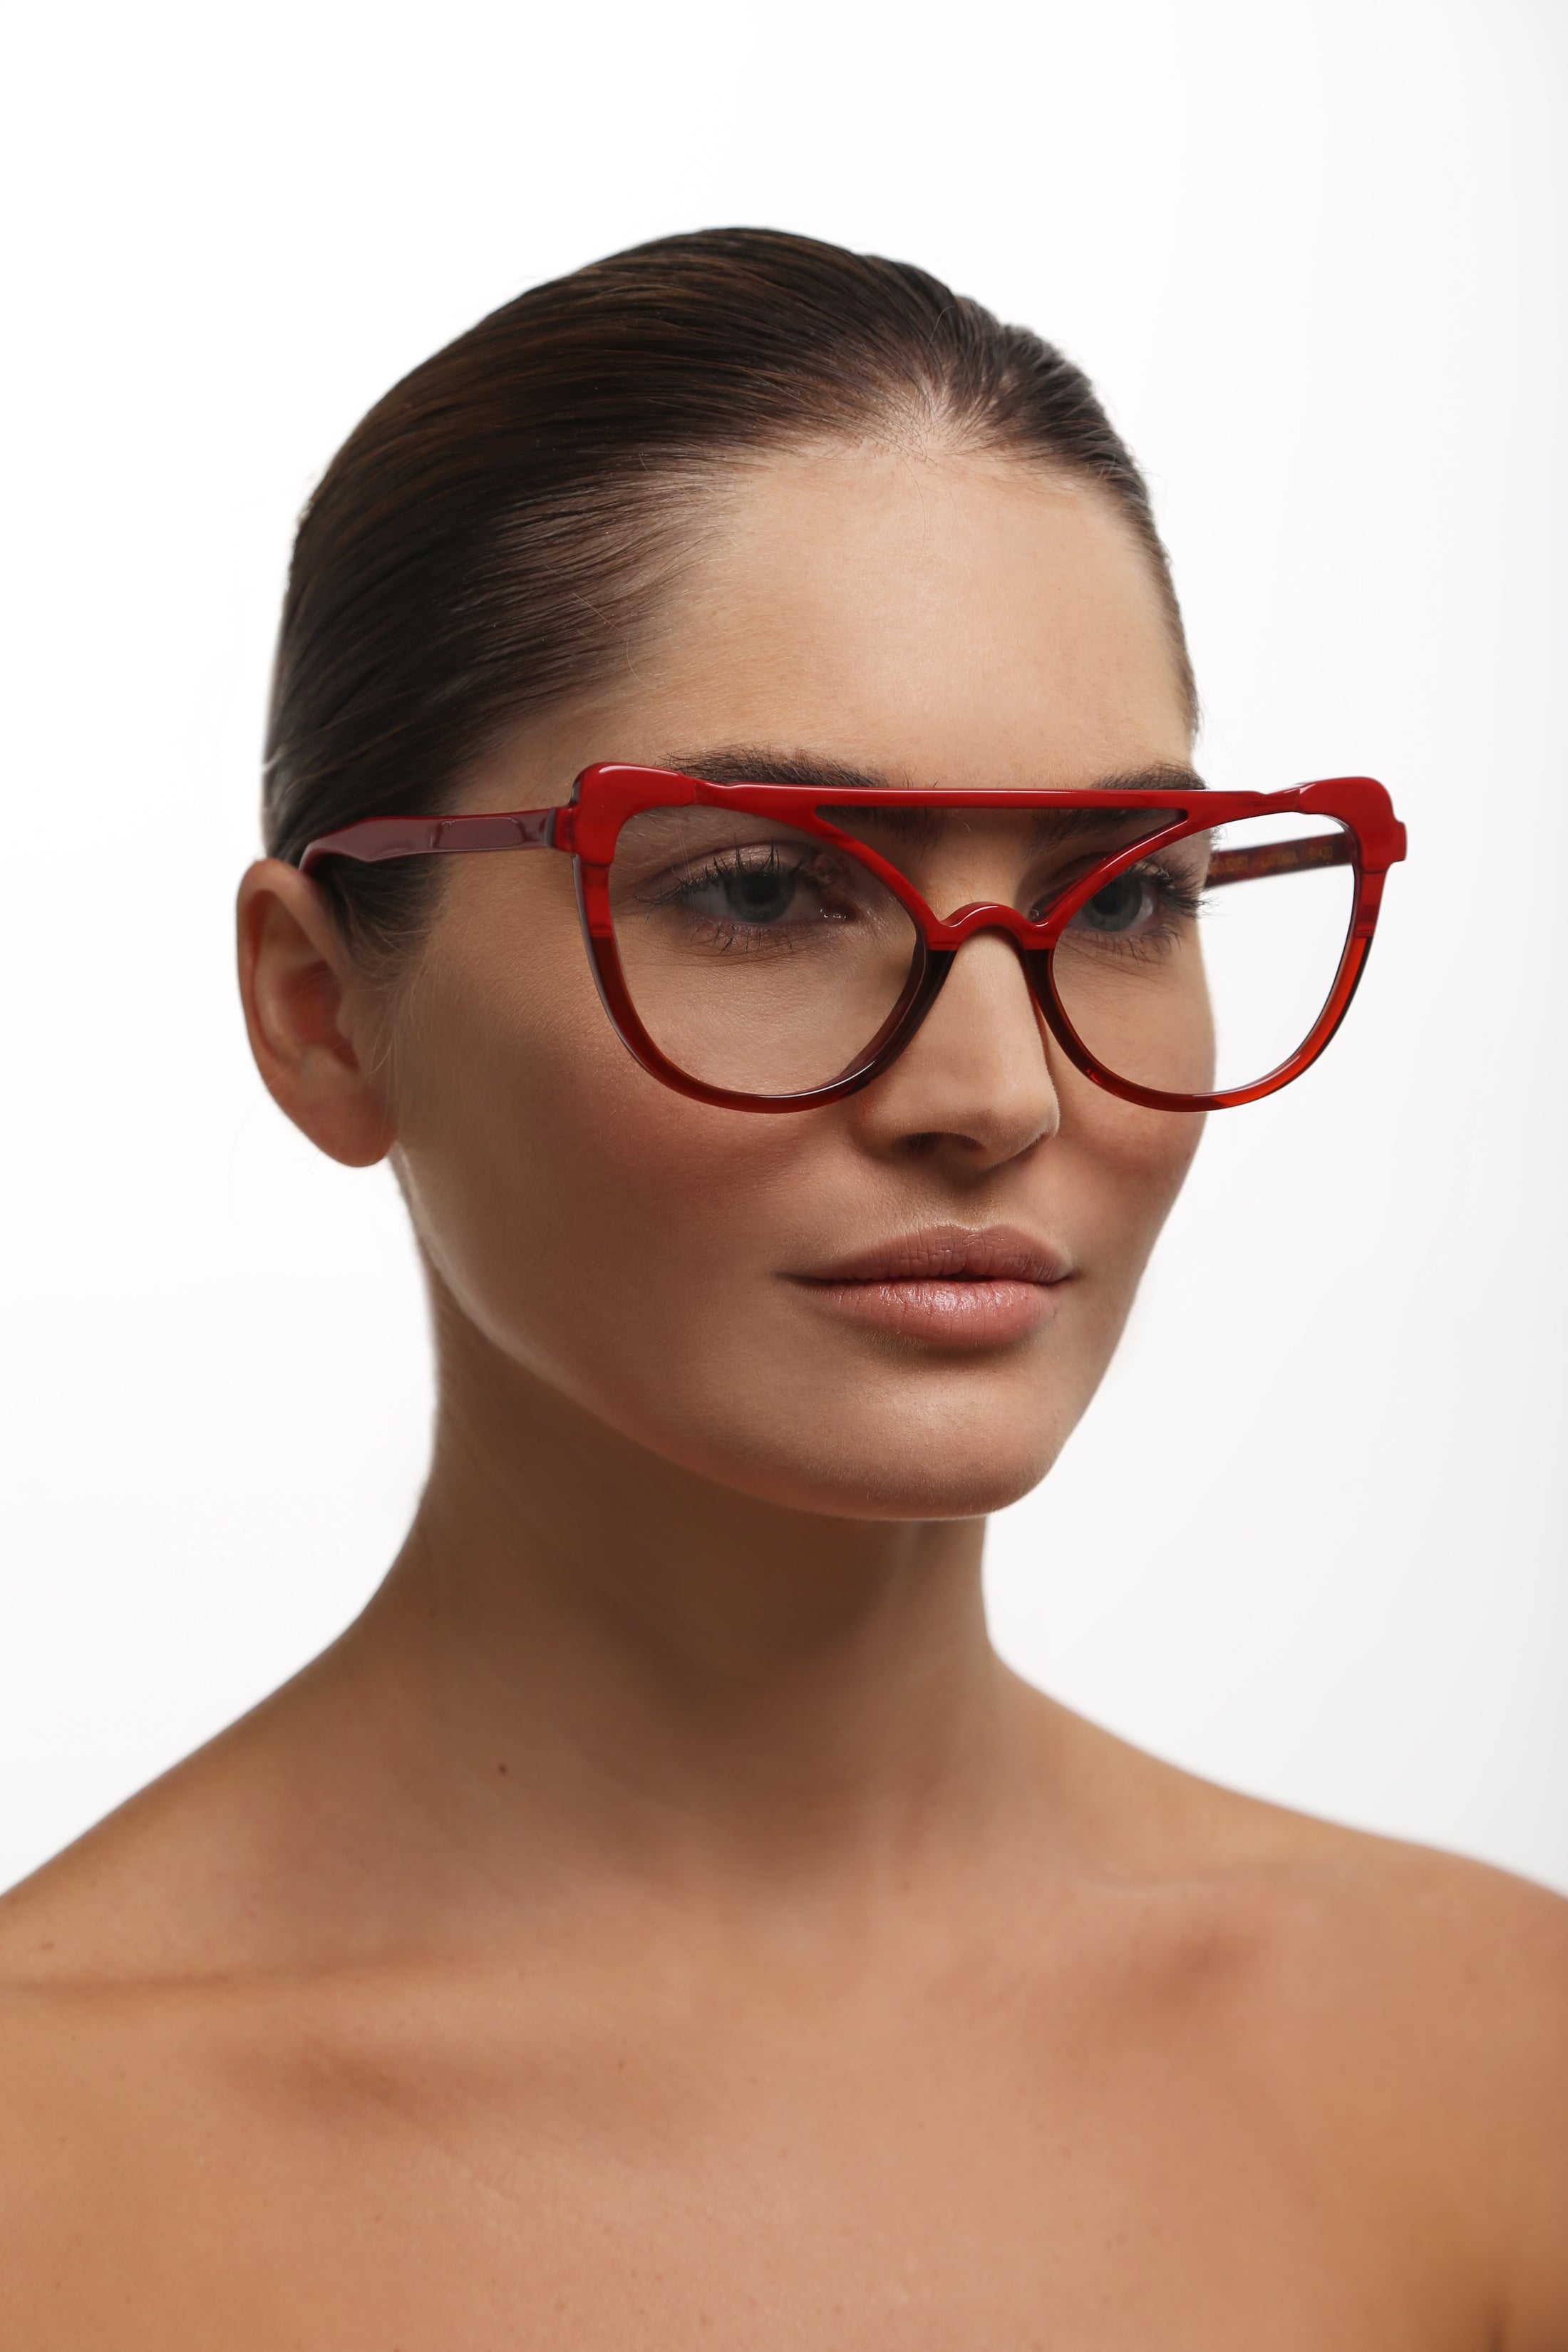 Gattara - Rosso - Cibelle Eyewear